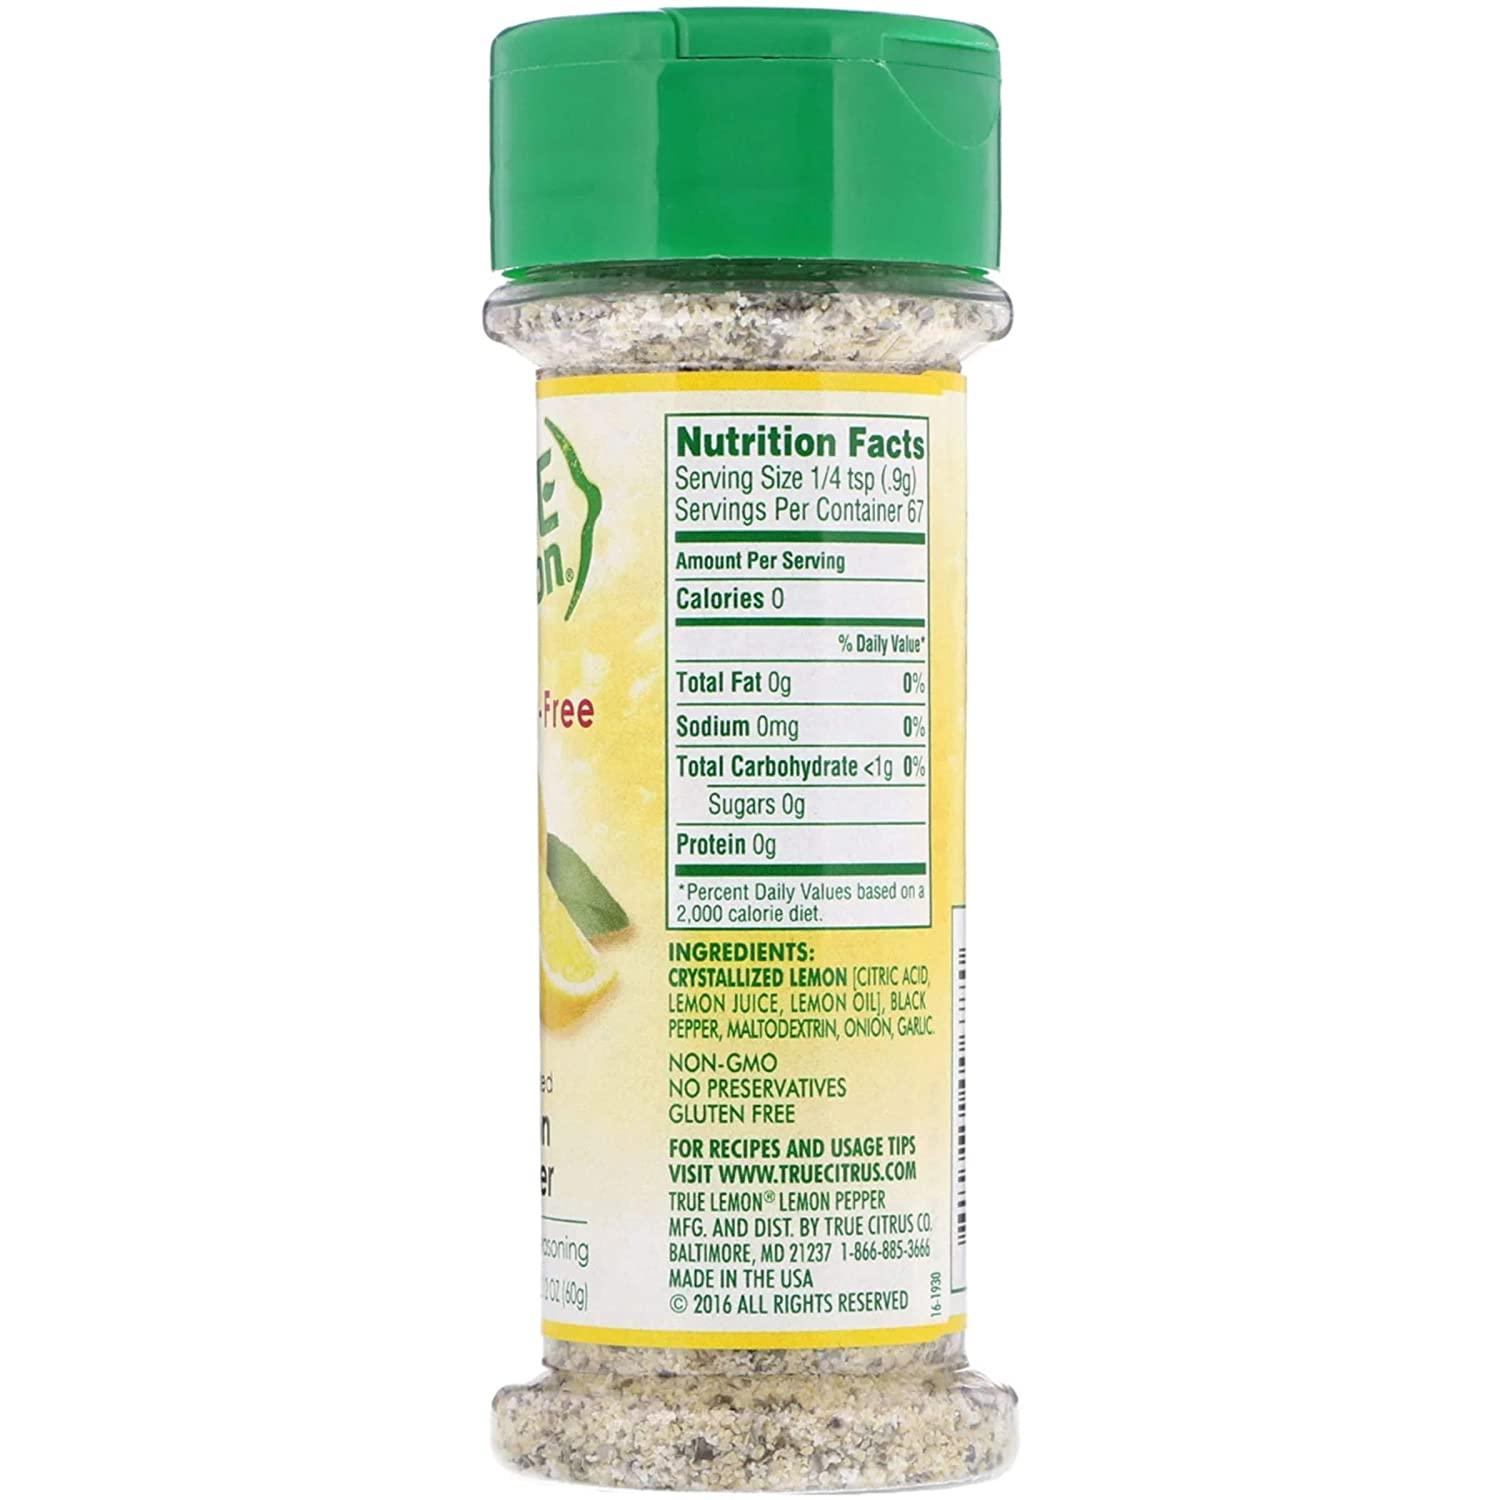 All-Natural Salt-Free Lemon Peppercorn Seasoning Blend in a Spice